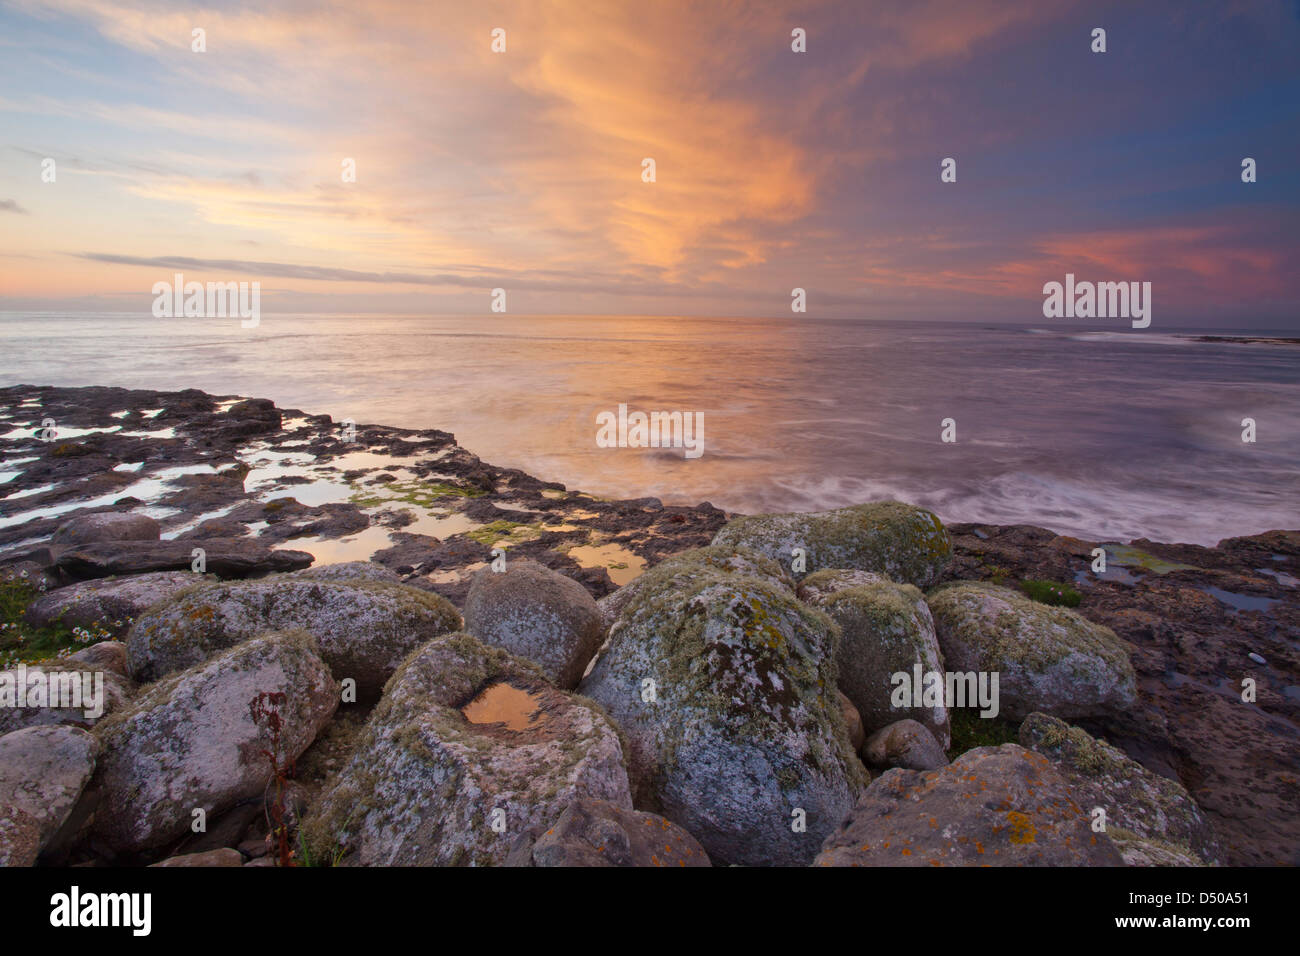 Sunset over coastal boulders at Easky, County Sligo, Ireland. Stock Photo